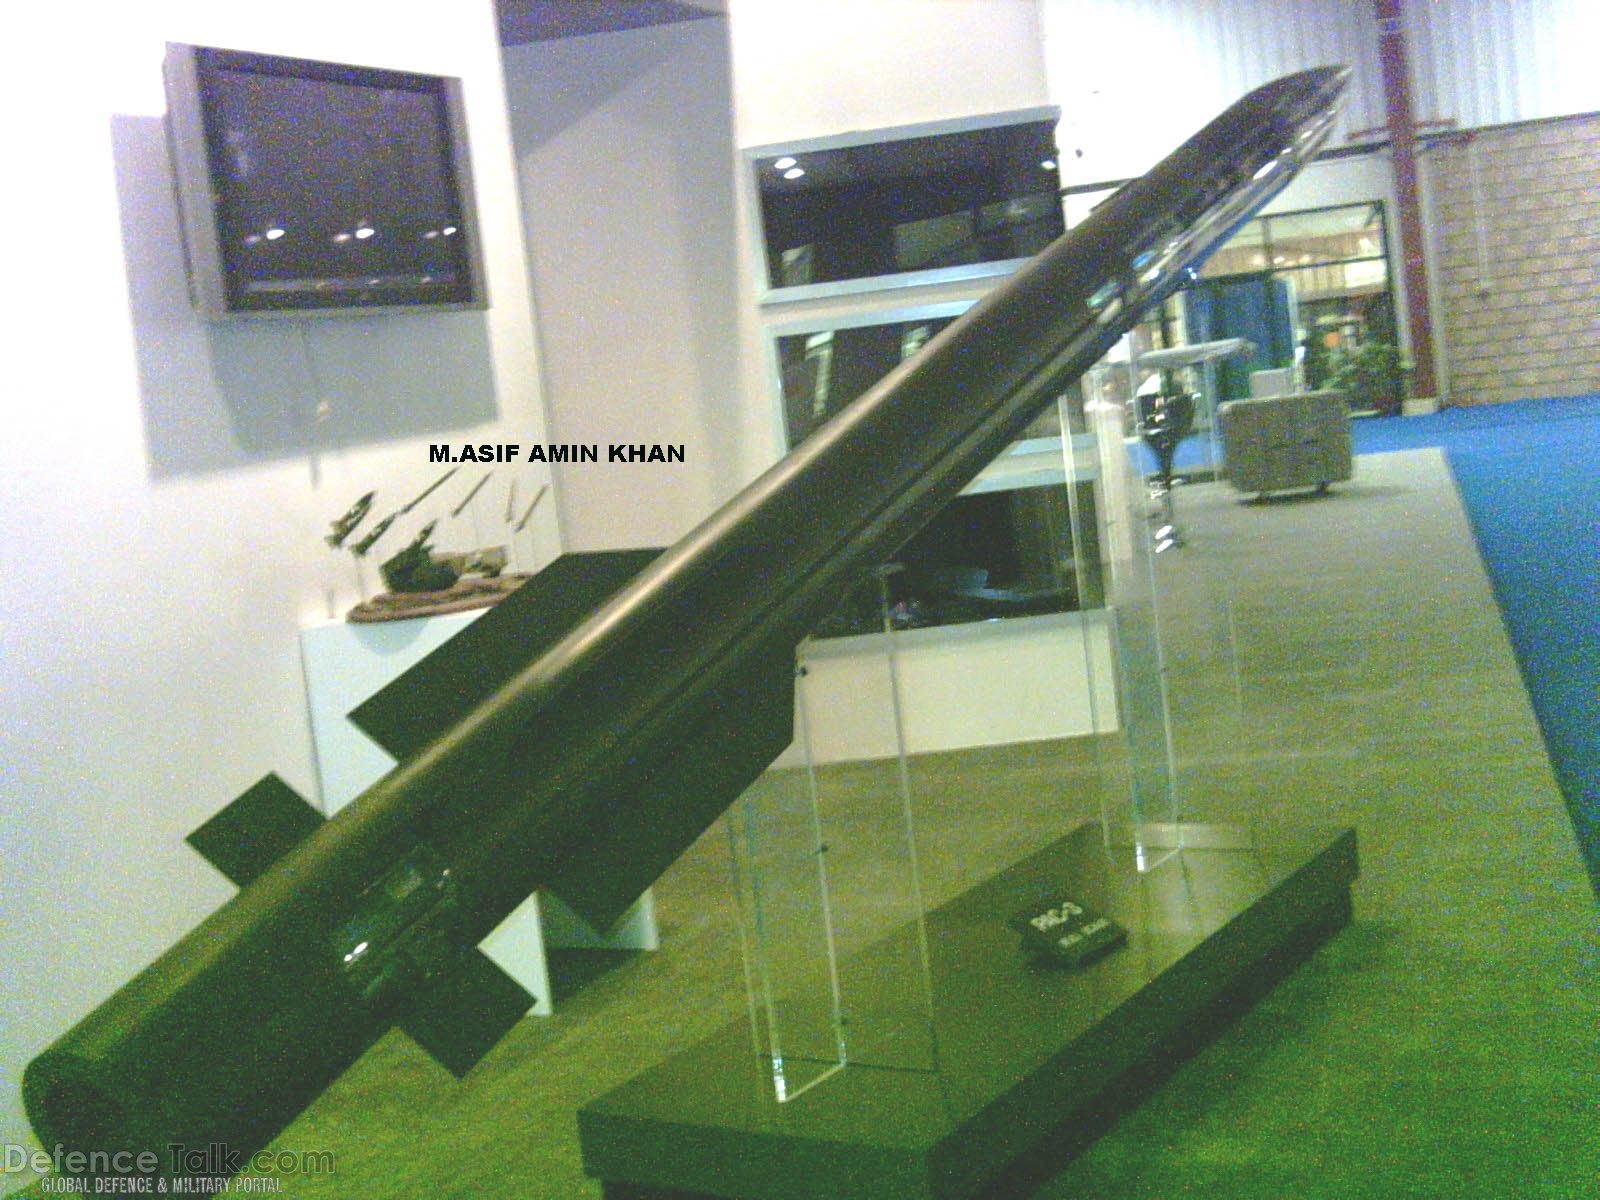 PAC-3 Missile - IDEAS 2006, Pakistan